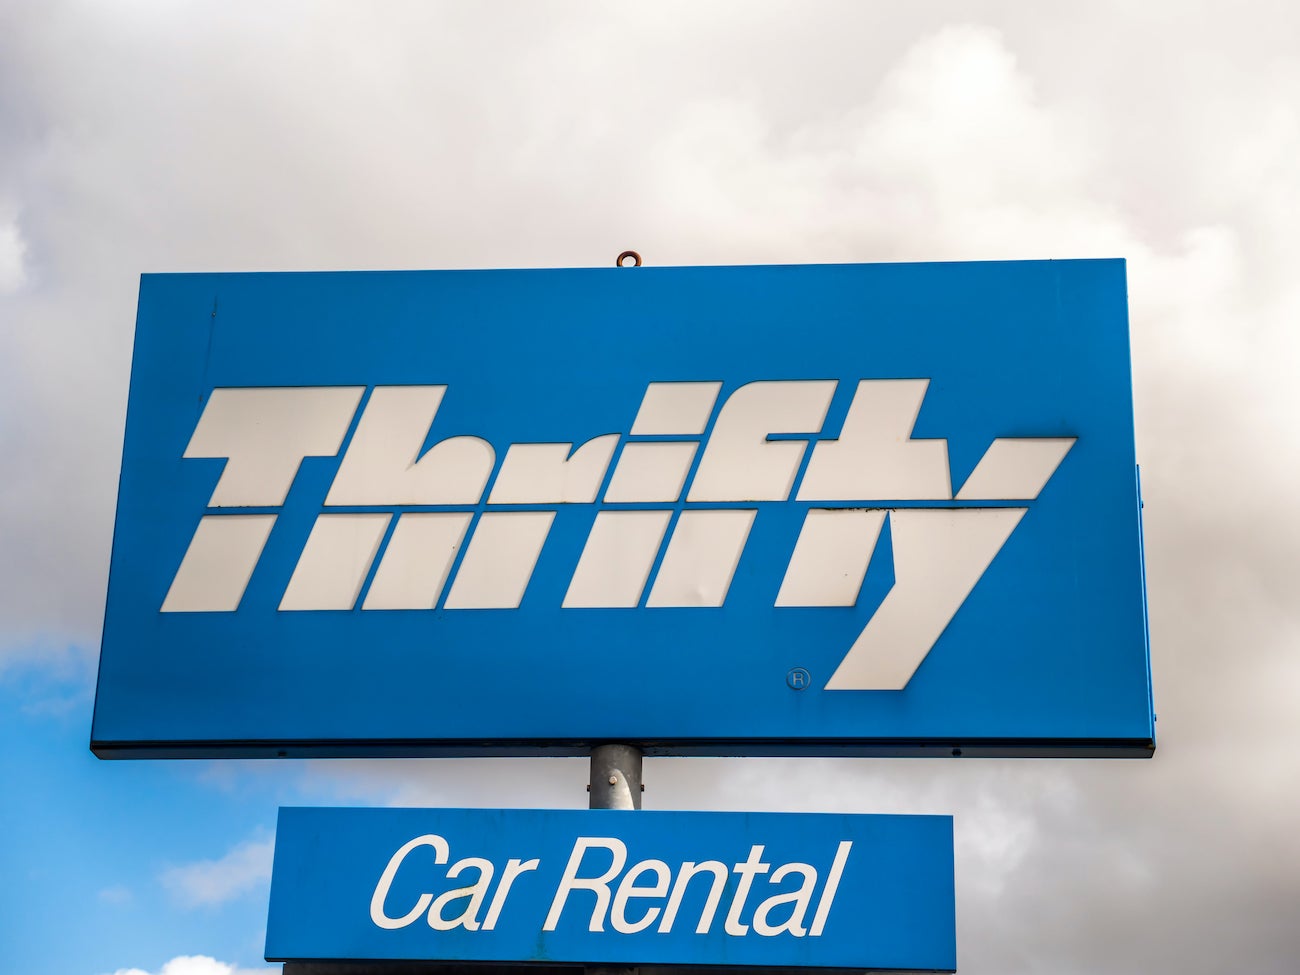 Thrifty car rental sign